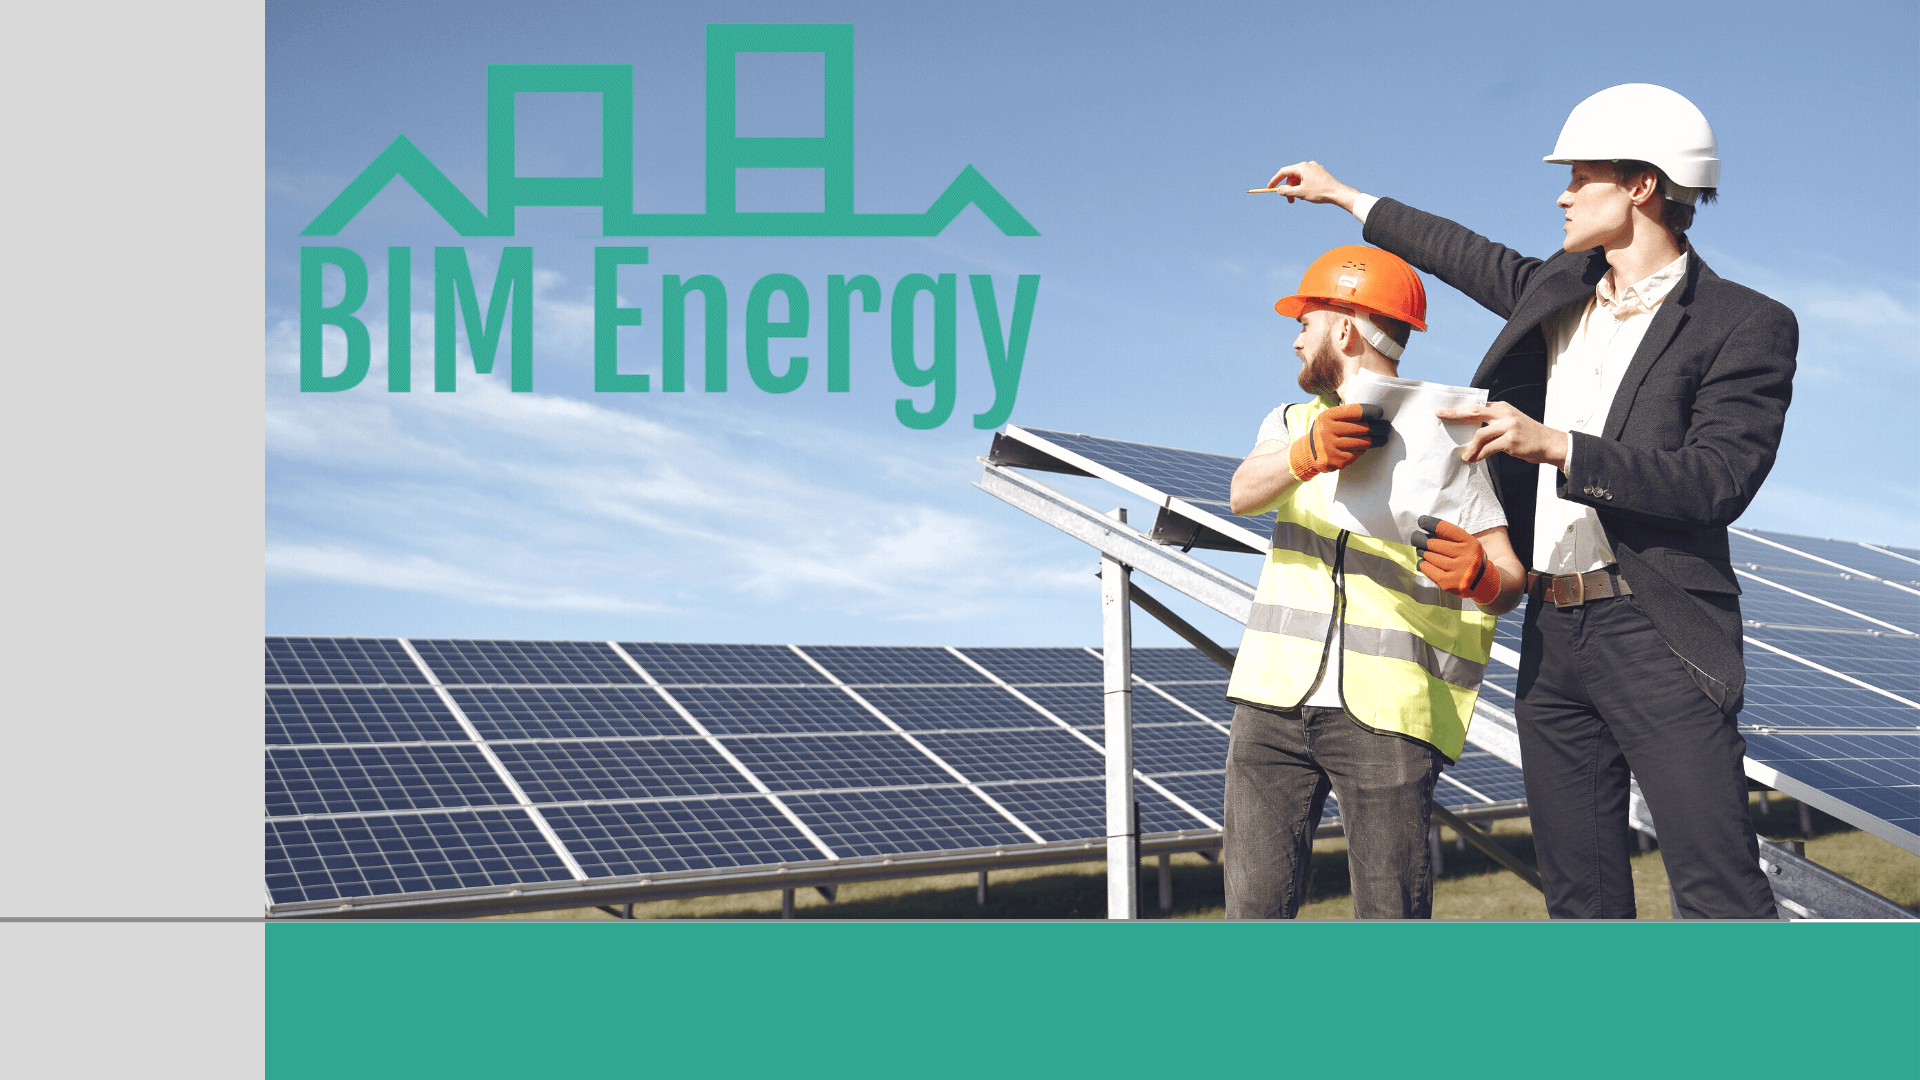 Benefits of BIM Energy